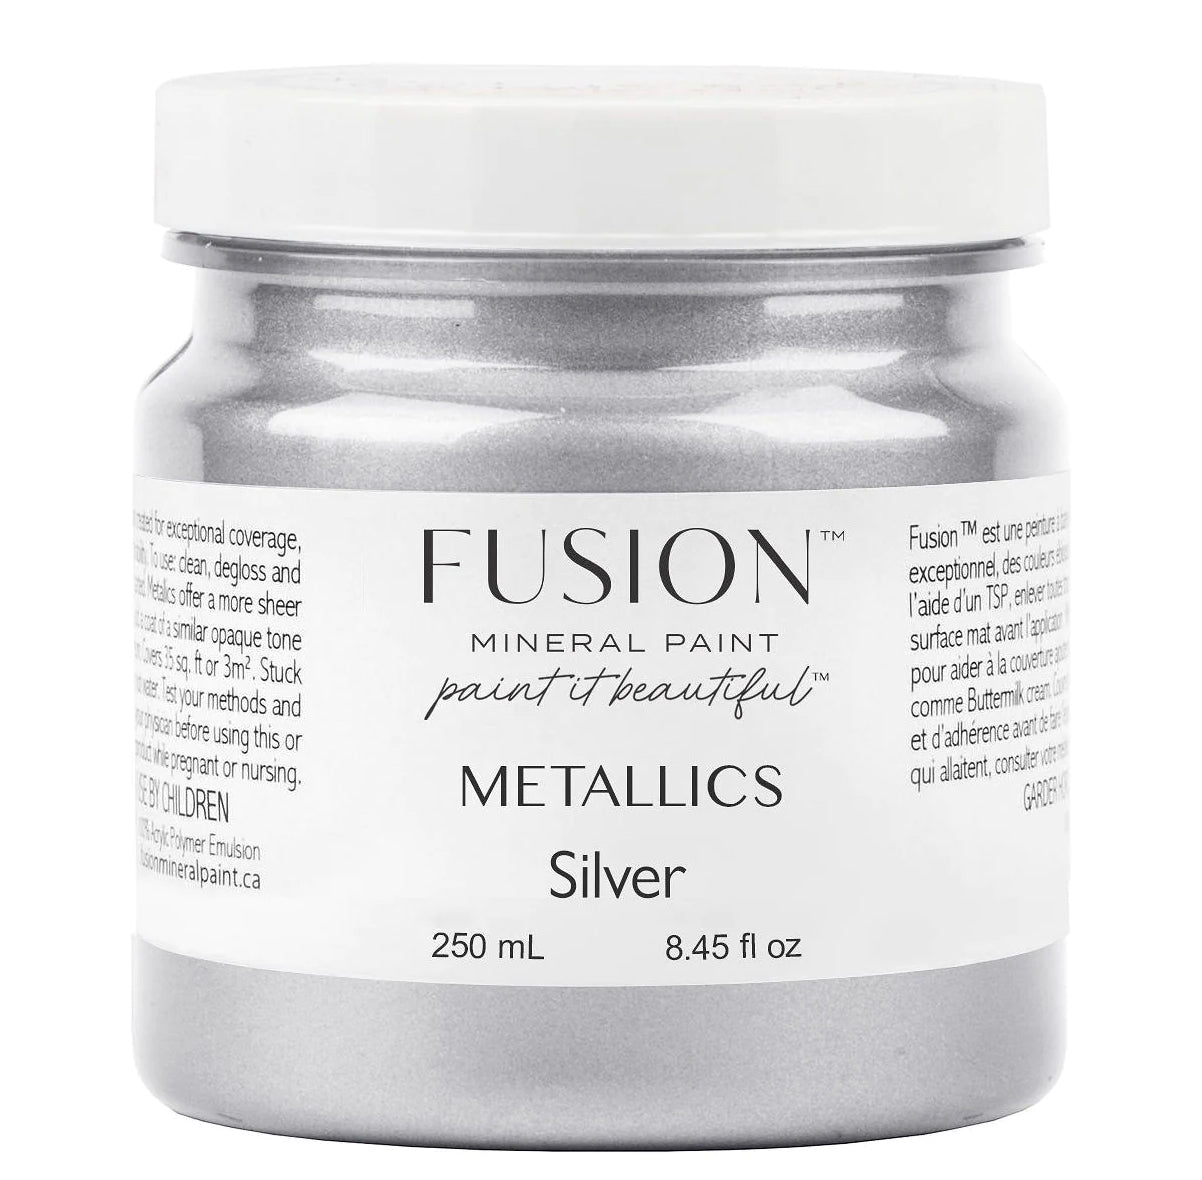 Metallics: Silver